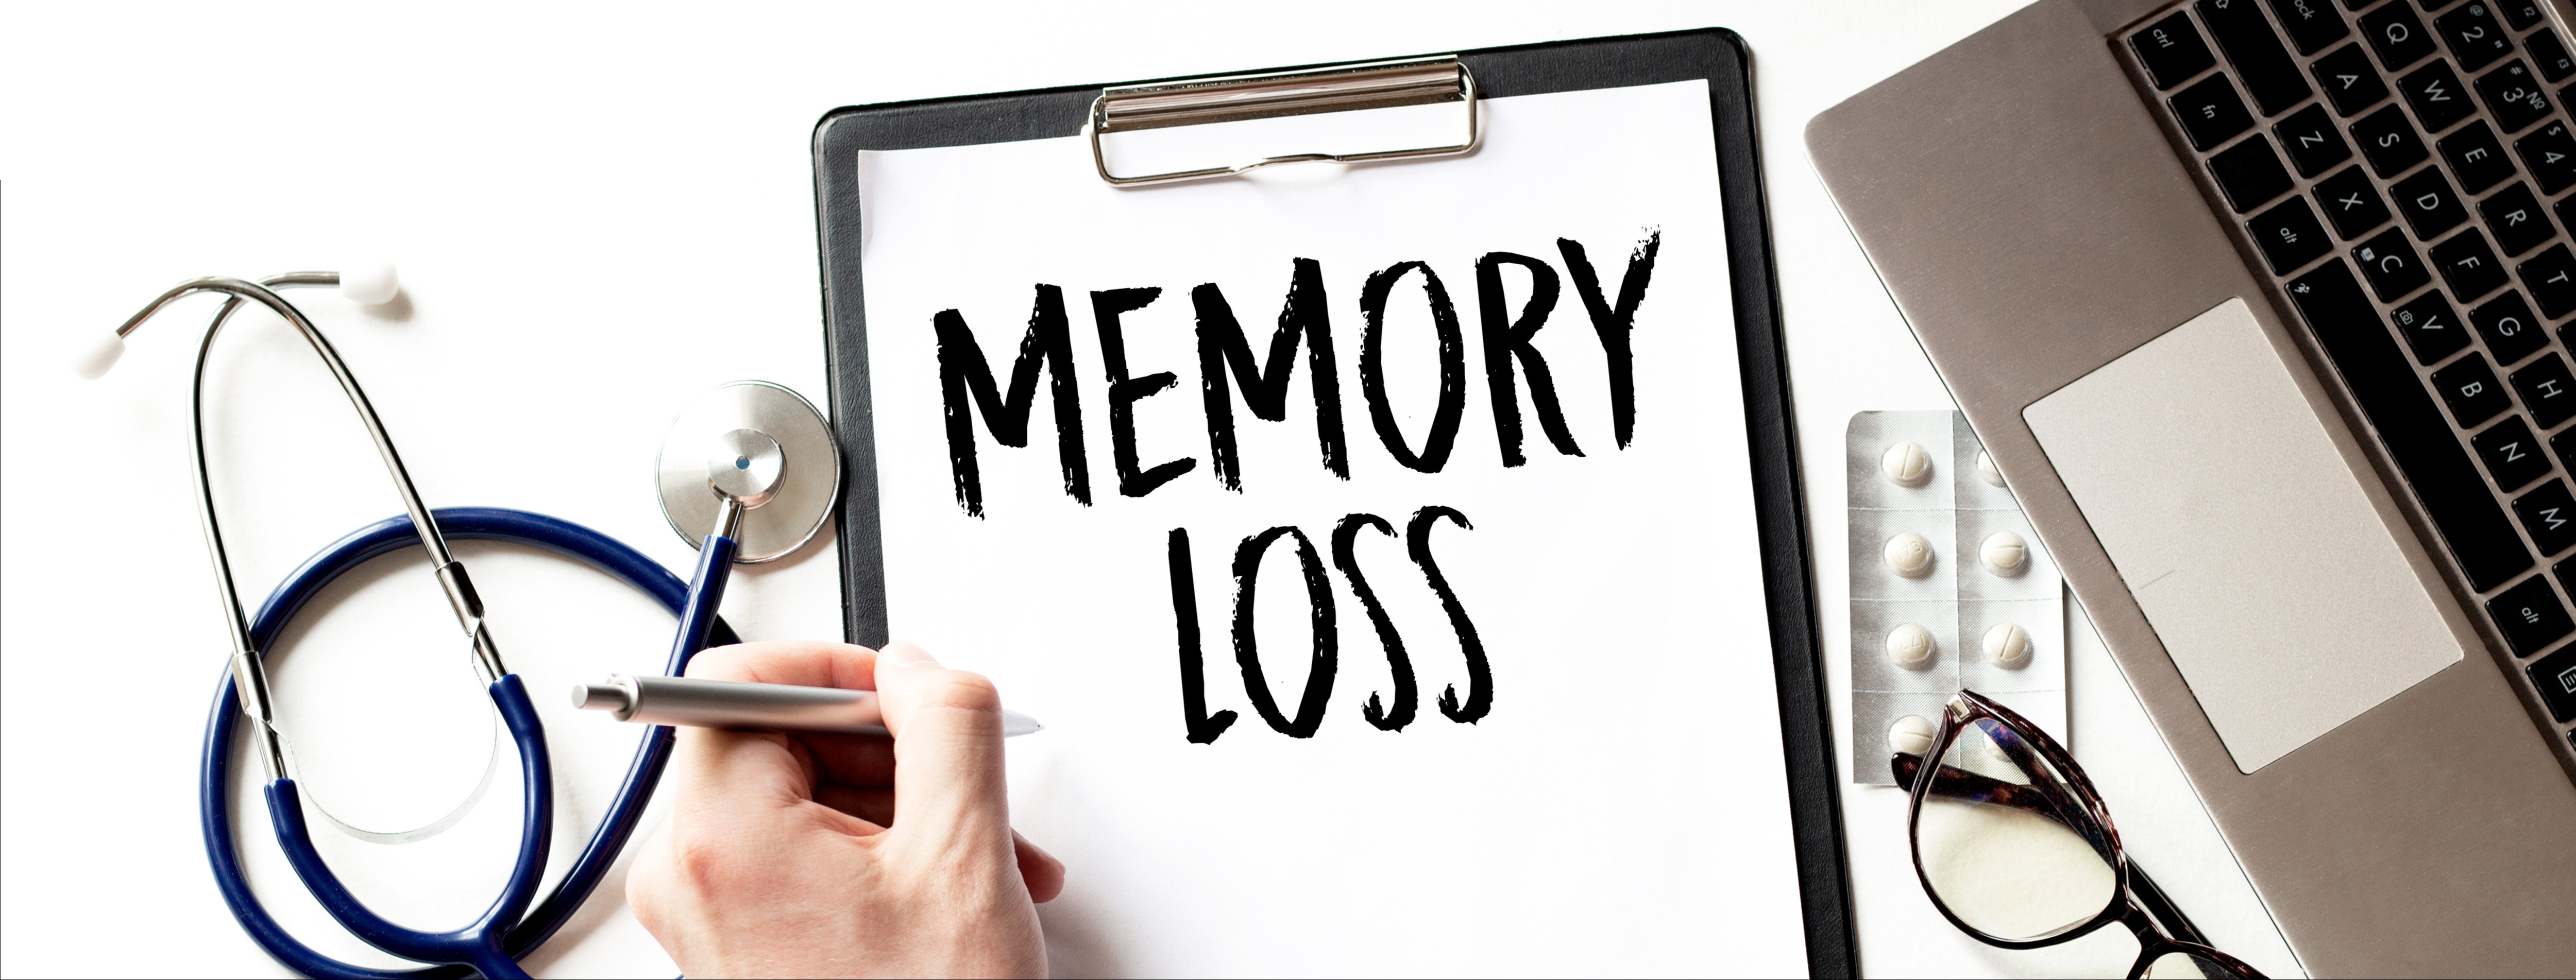 trauma and memory loss